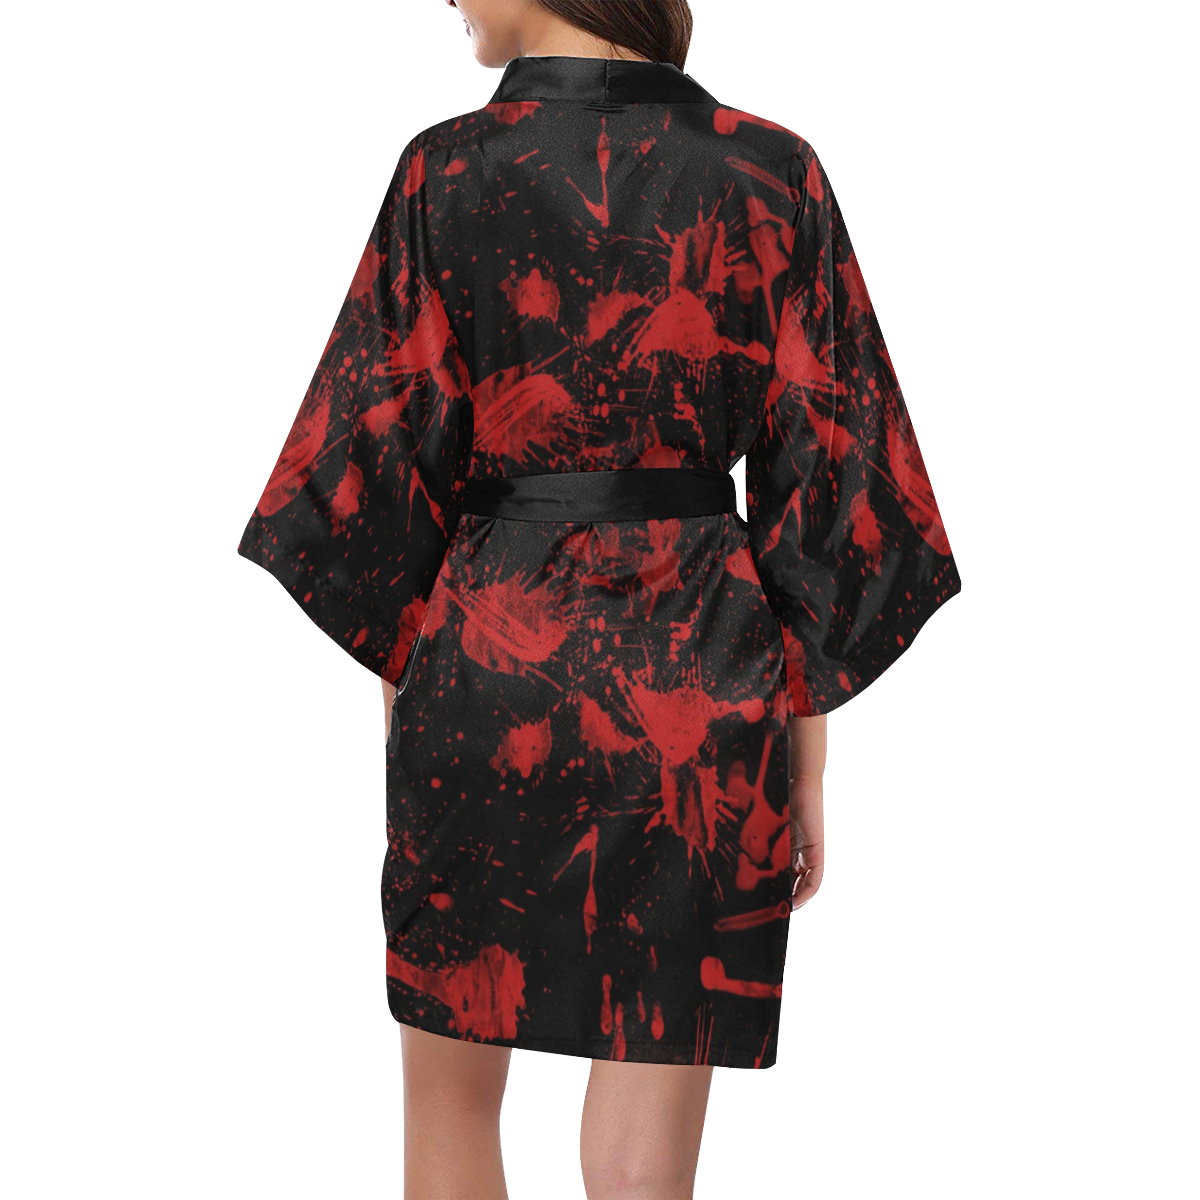 Scary Blood by Artdream Kimono Robe